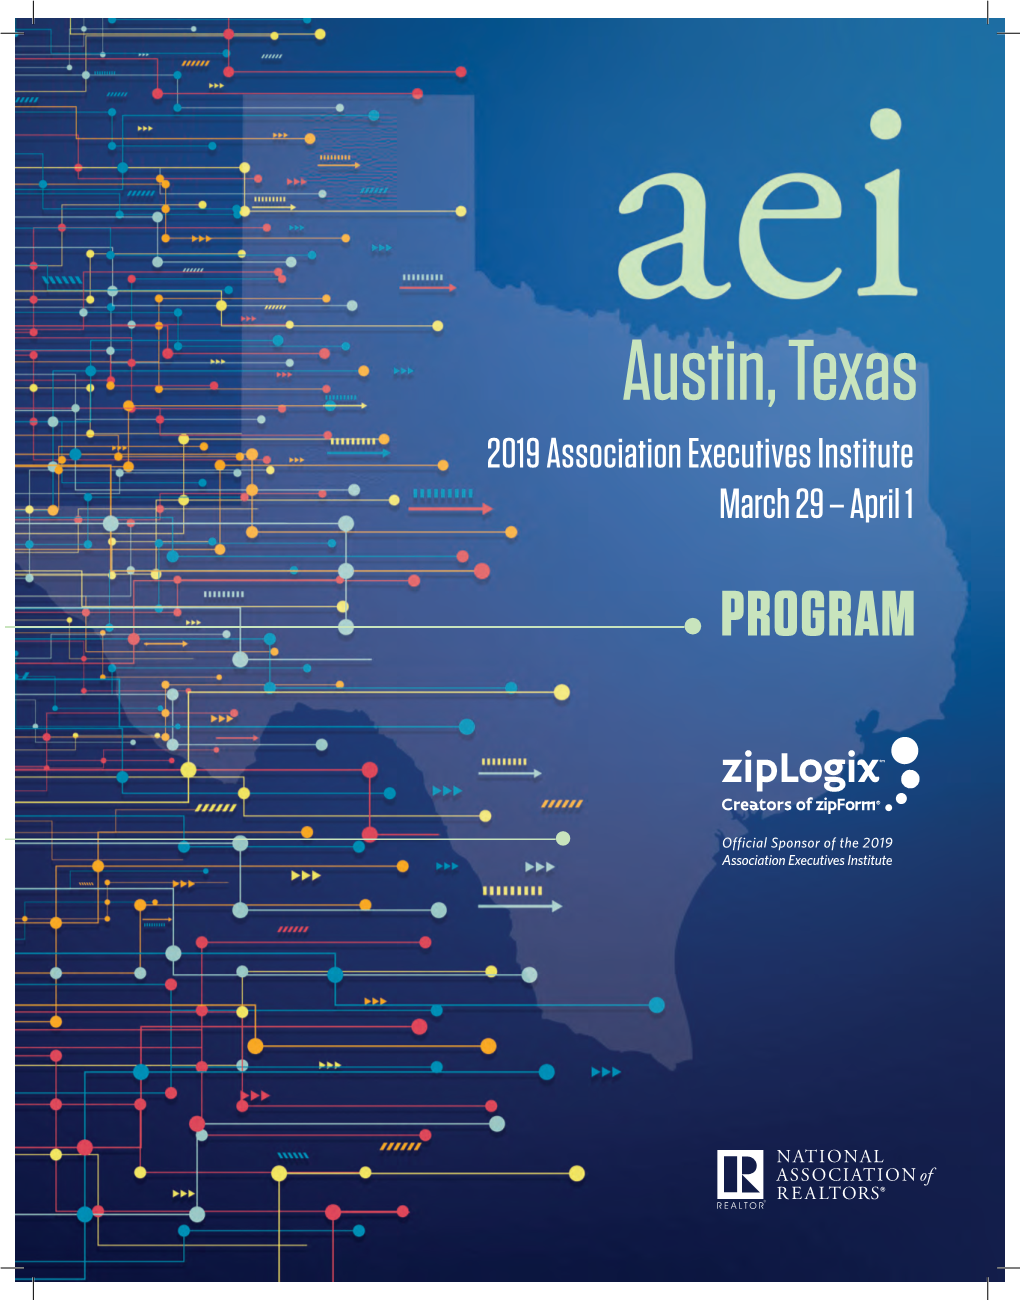 Austin, Texas 2019 Association Executives Institute March 29 – April 1 PROGRAM